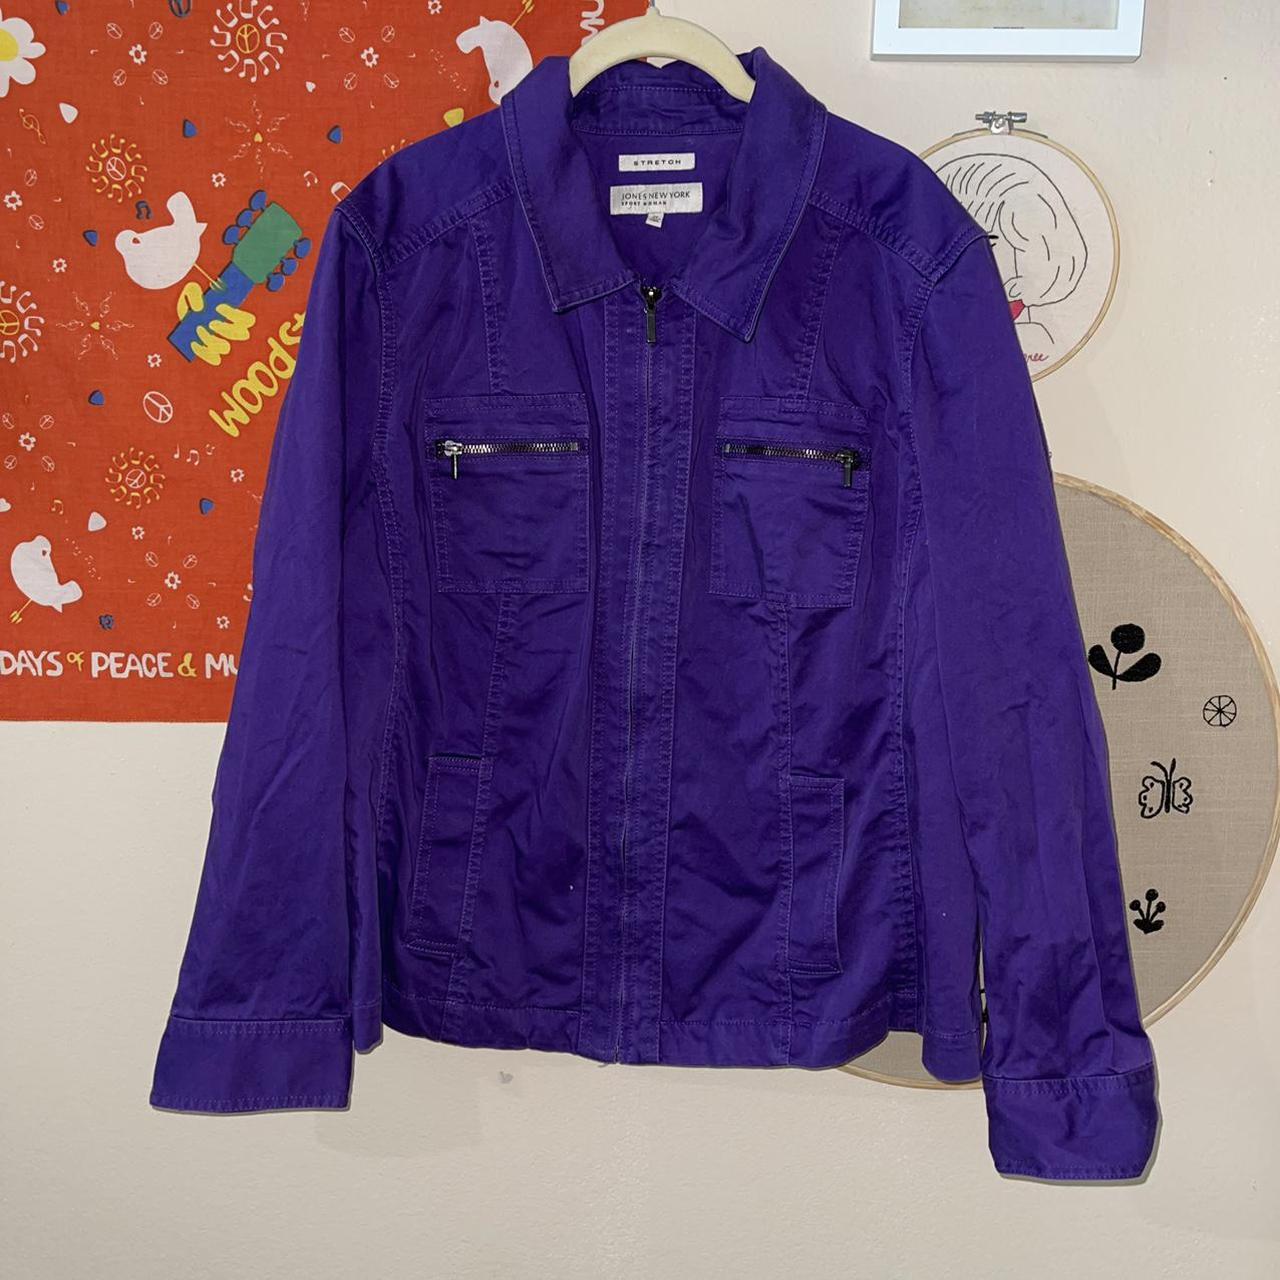 Product Image 1 - Jones New York purple jacket.